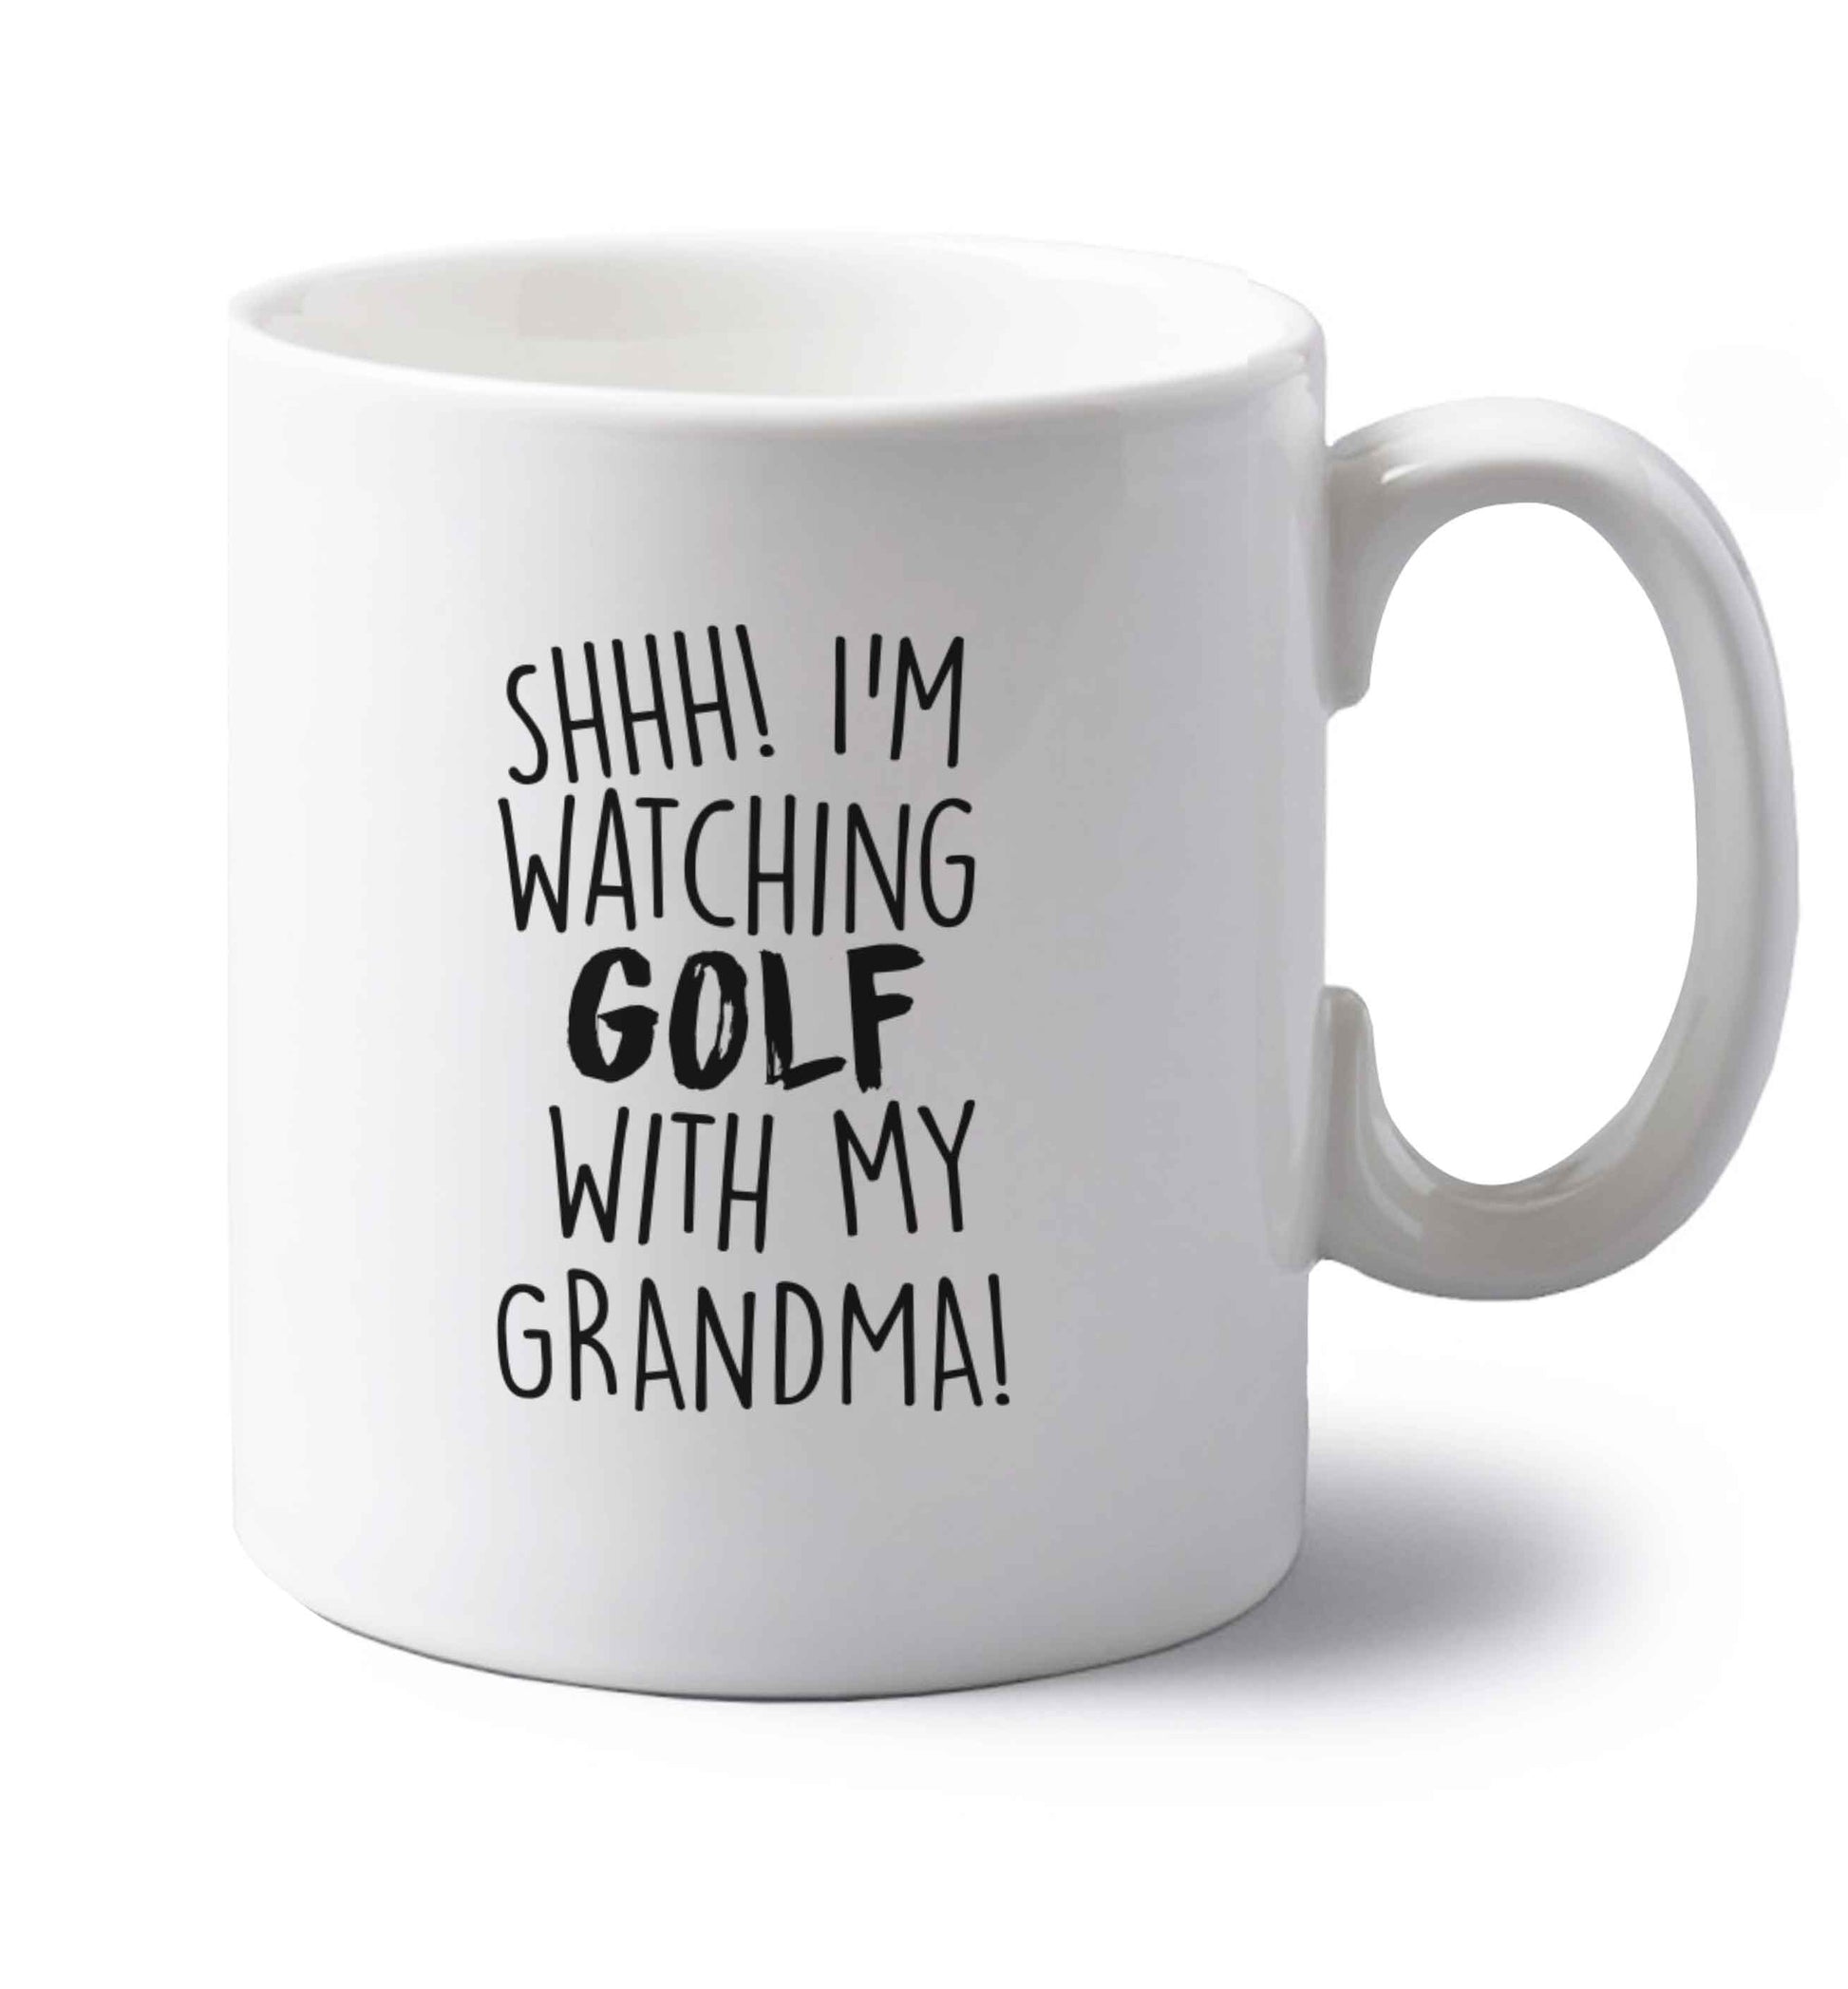 Shh I'm watching golf with my grandma left handed white ceramic mug 